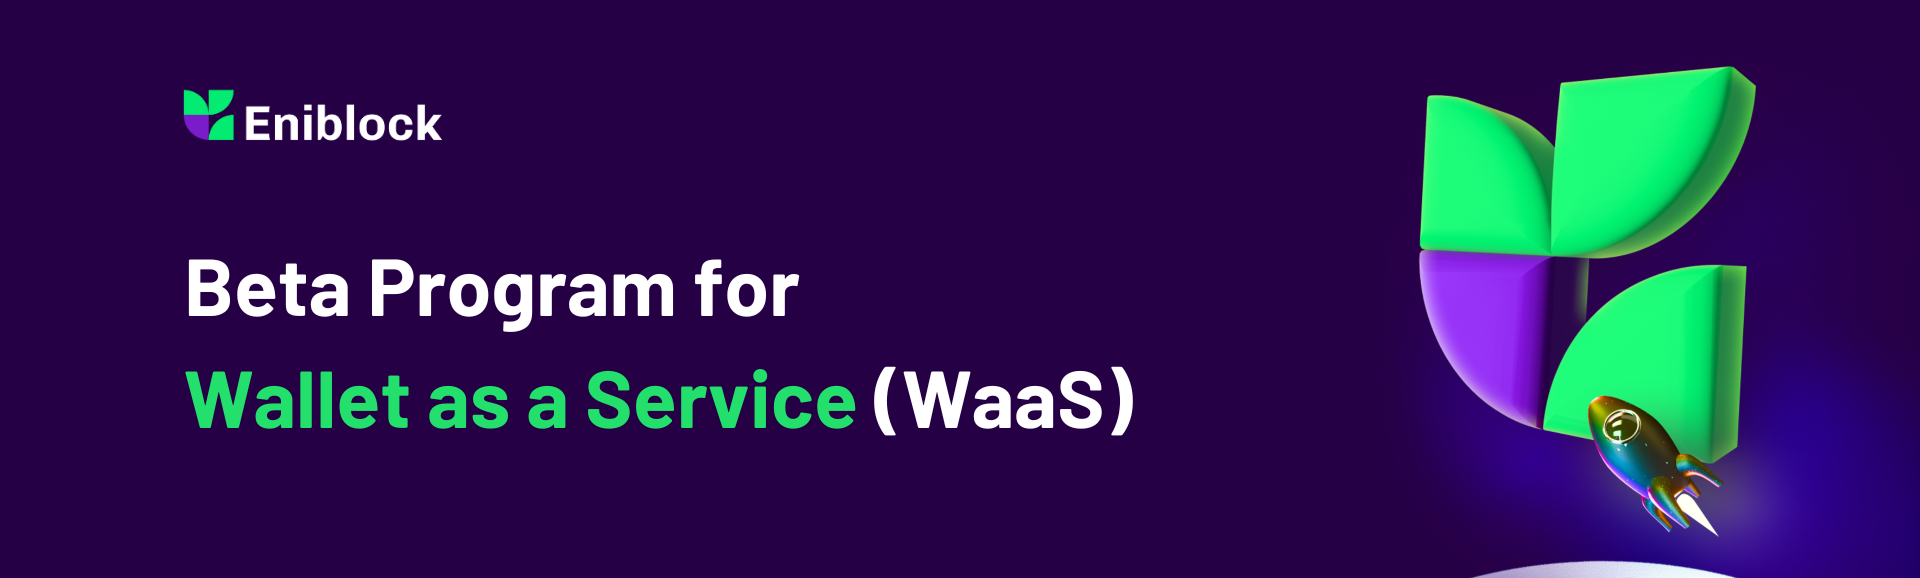 Beta Program for Wallet as a Service Banner2